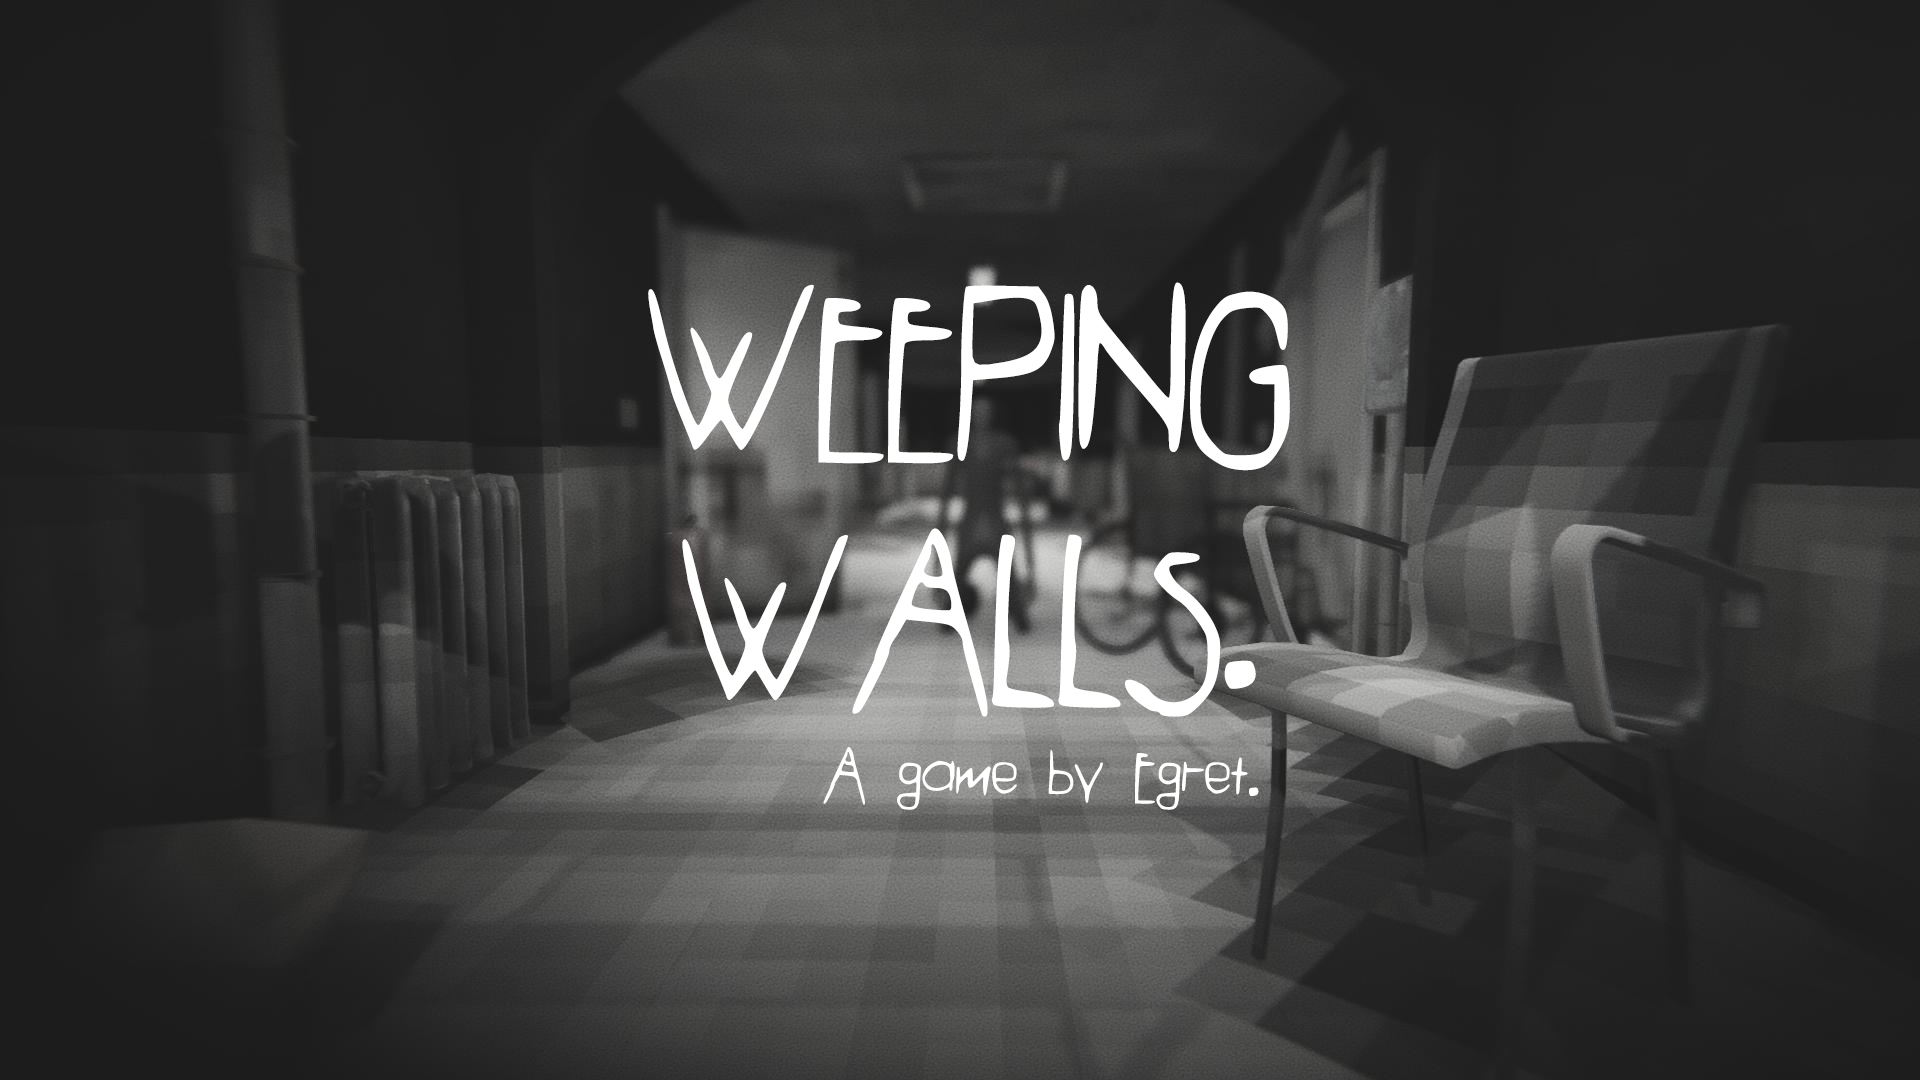 Weeping Walls